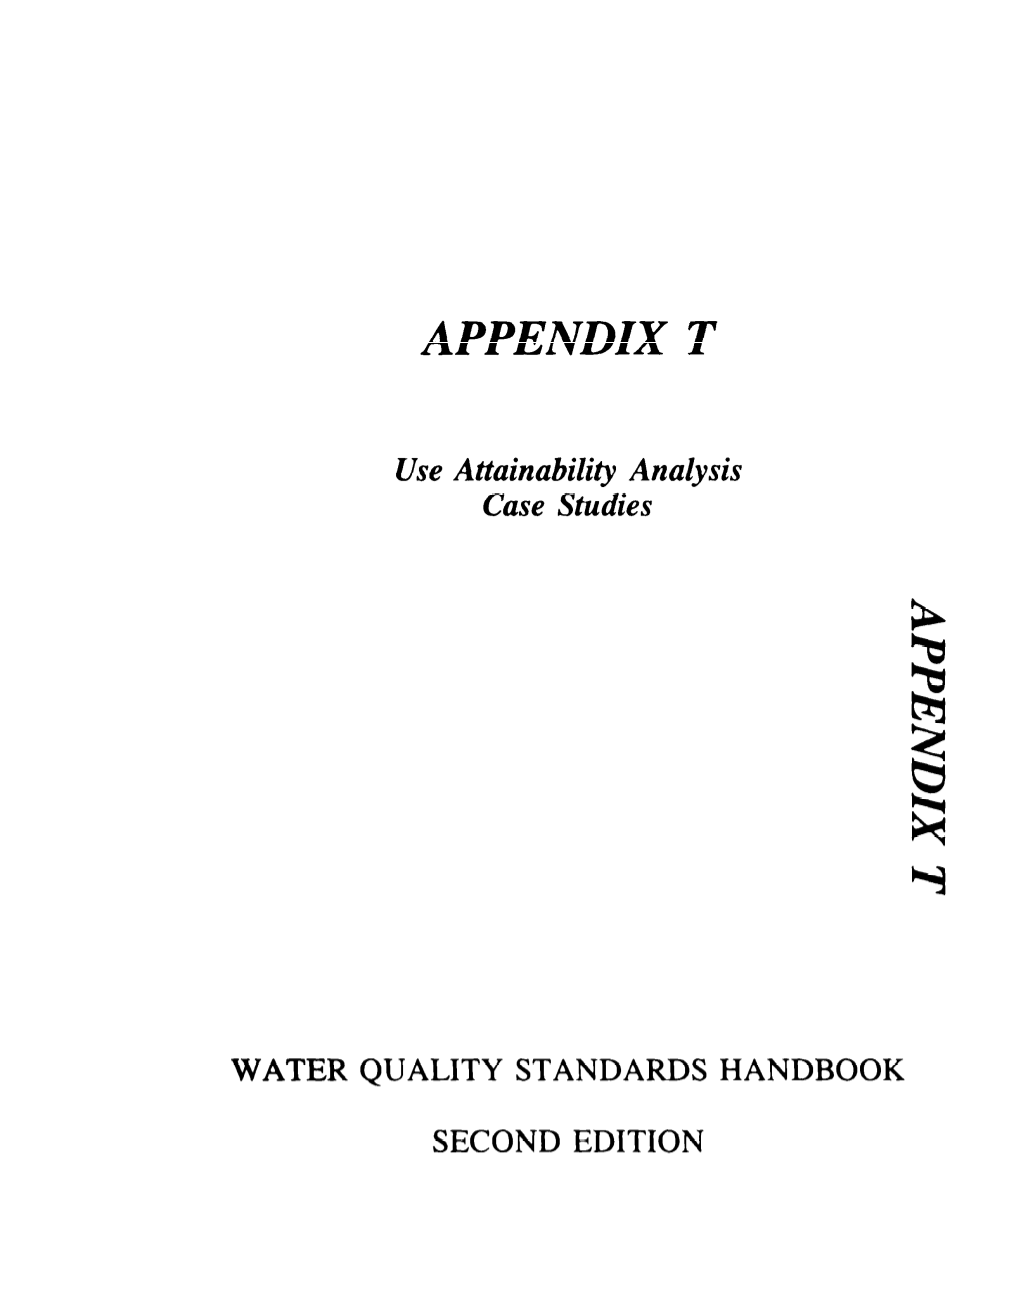 Water Quality Standards Handbook Second Edition Case Studies